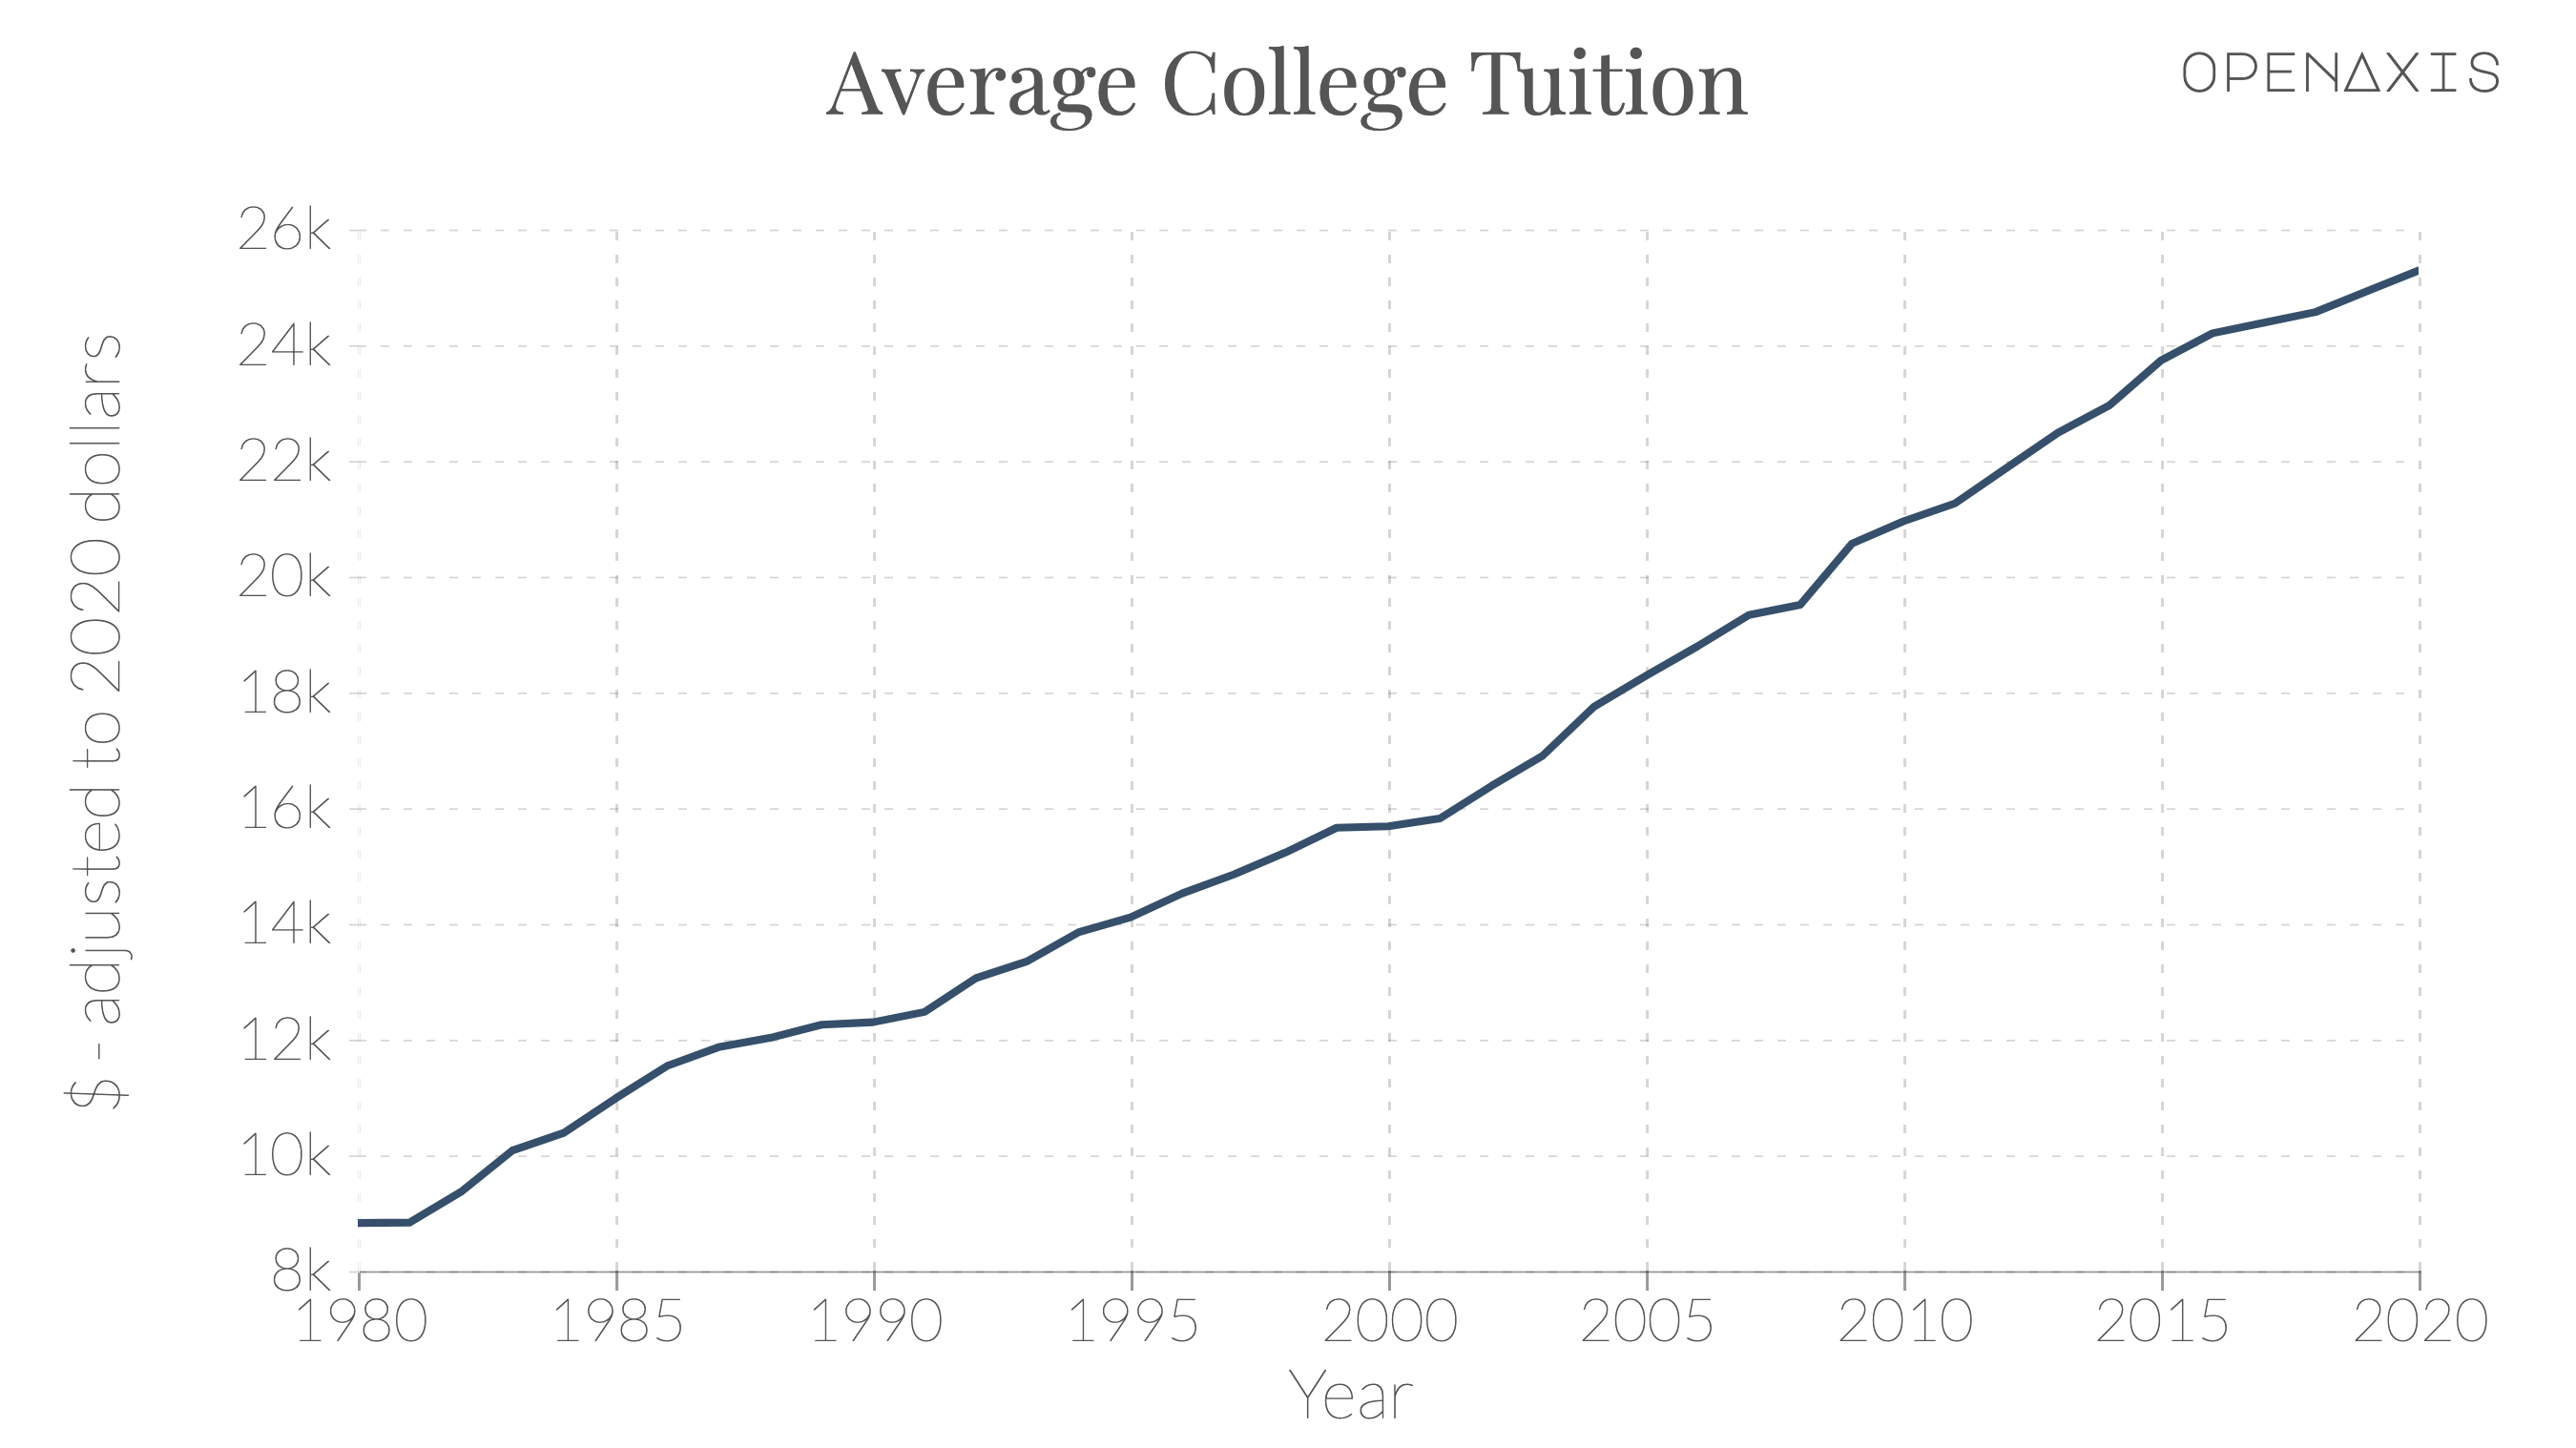 "Average College Tuition "